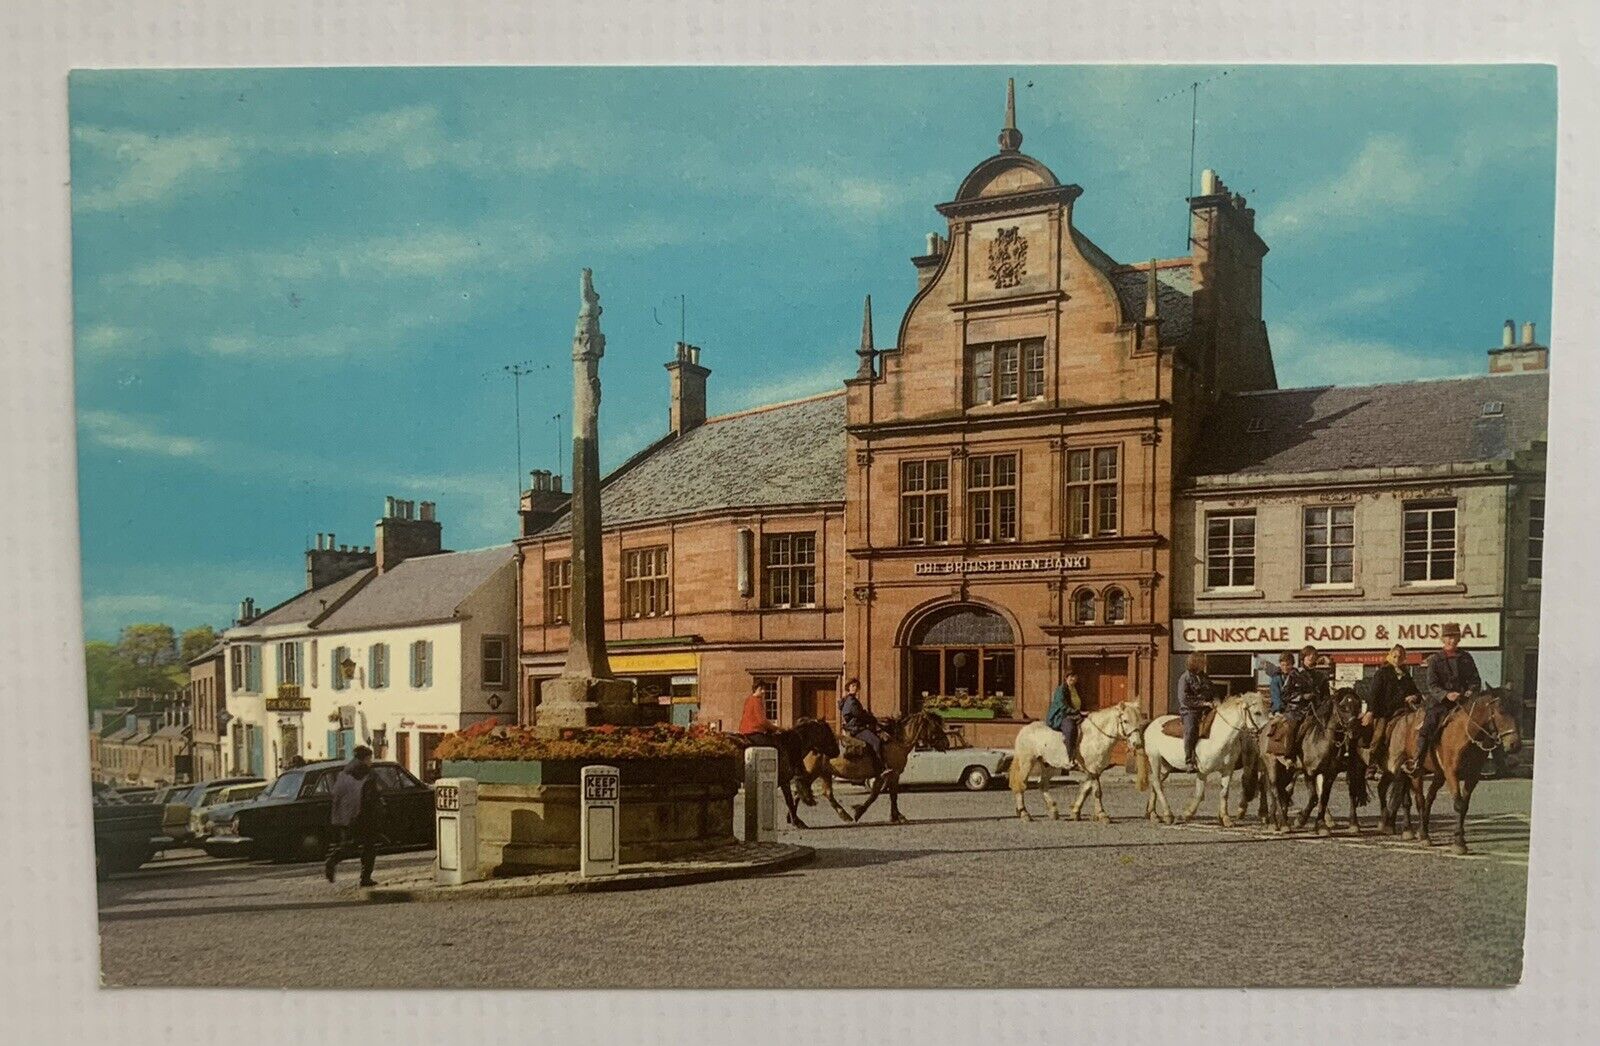 House Clearance - Melrose Market Square British Linen Bank Old Shops Cars Horse Vintage Not Posted